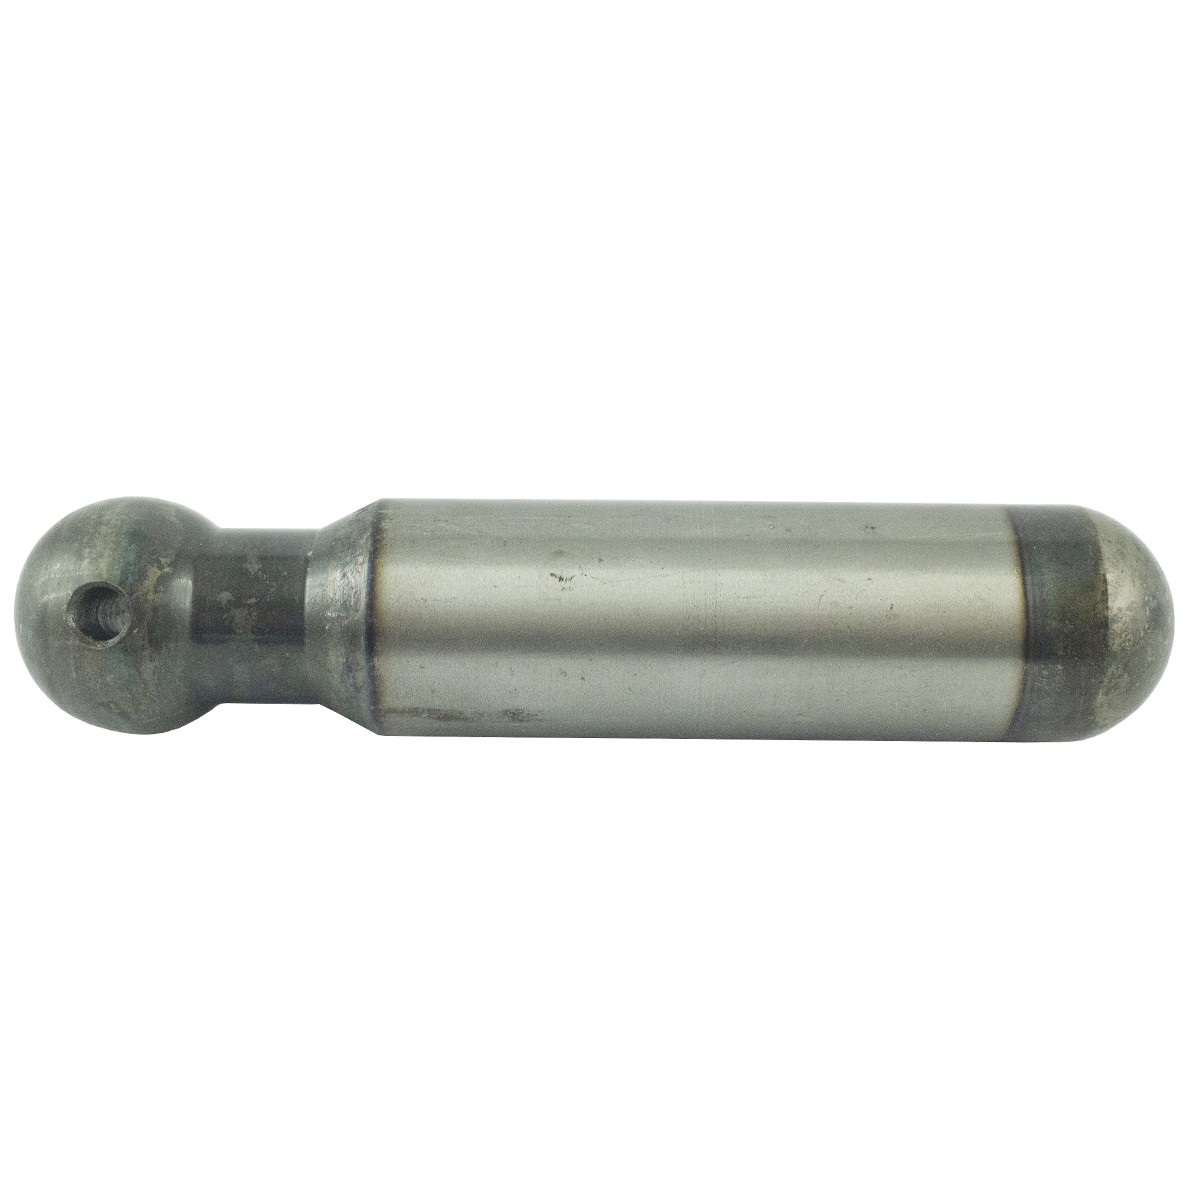 Lifter 185mm hydraulic piston, Yanmar EF453T, 5-25-117-05